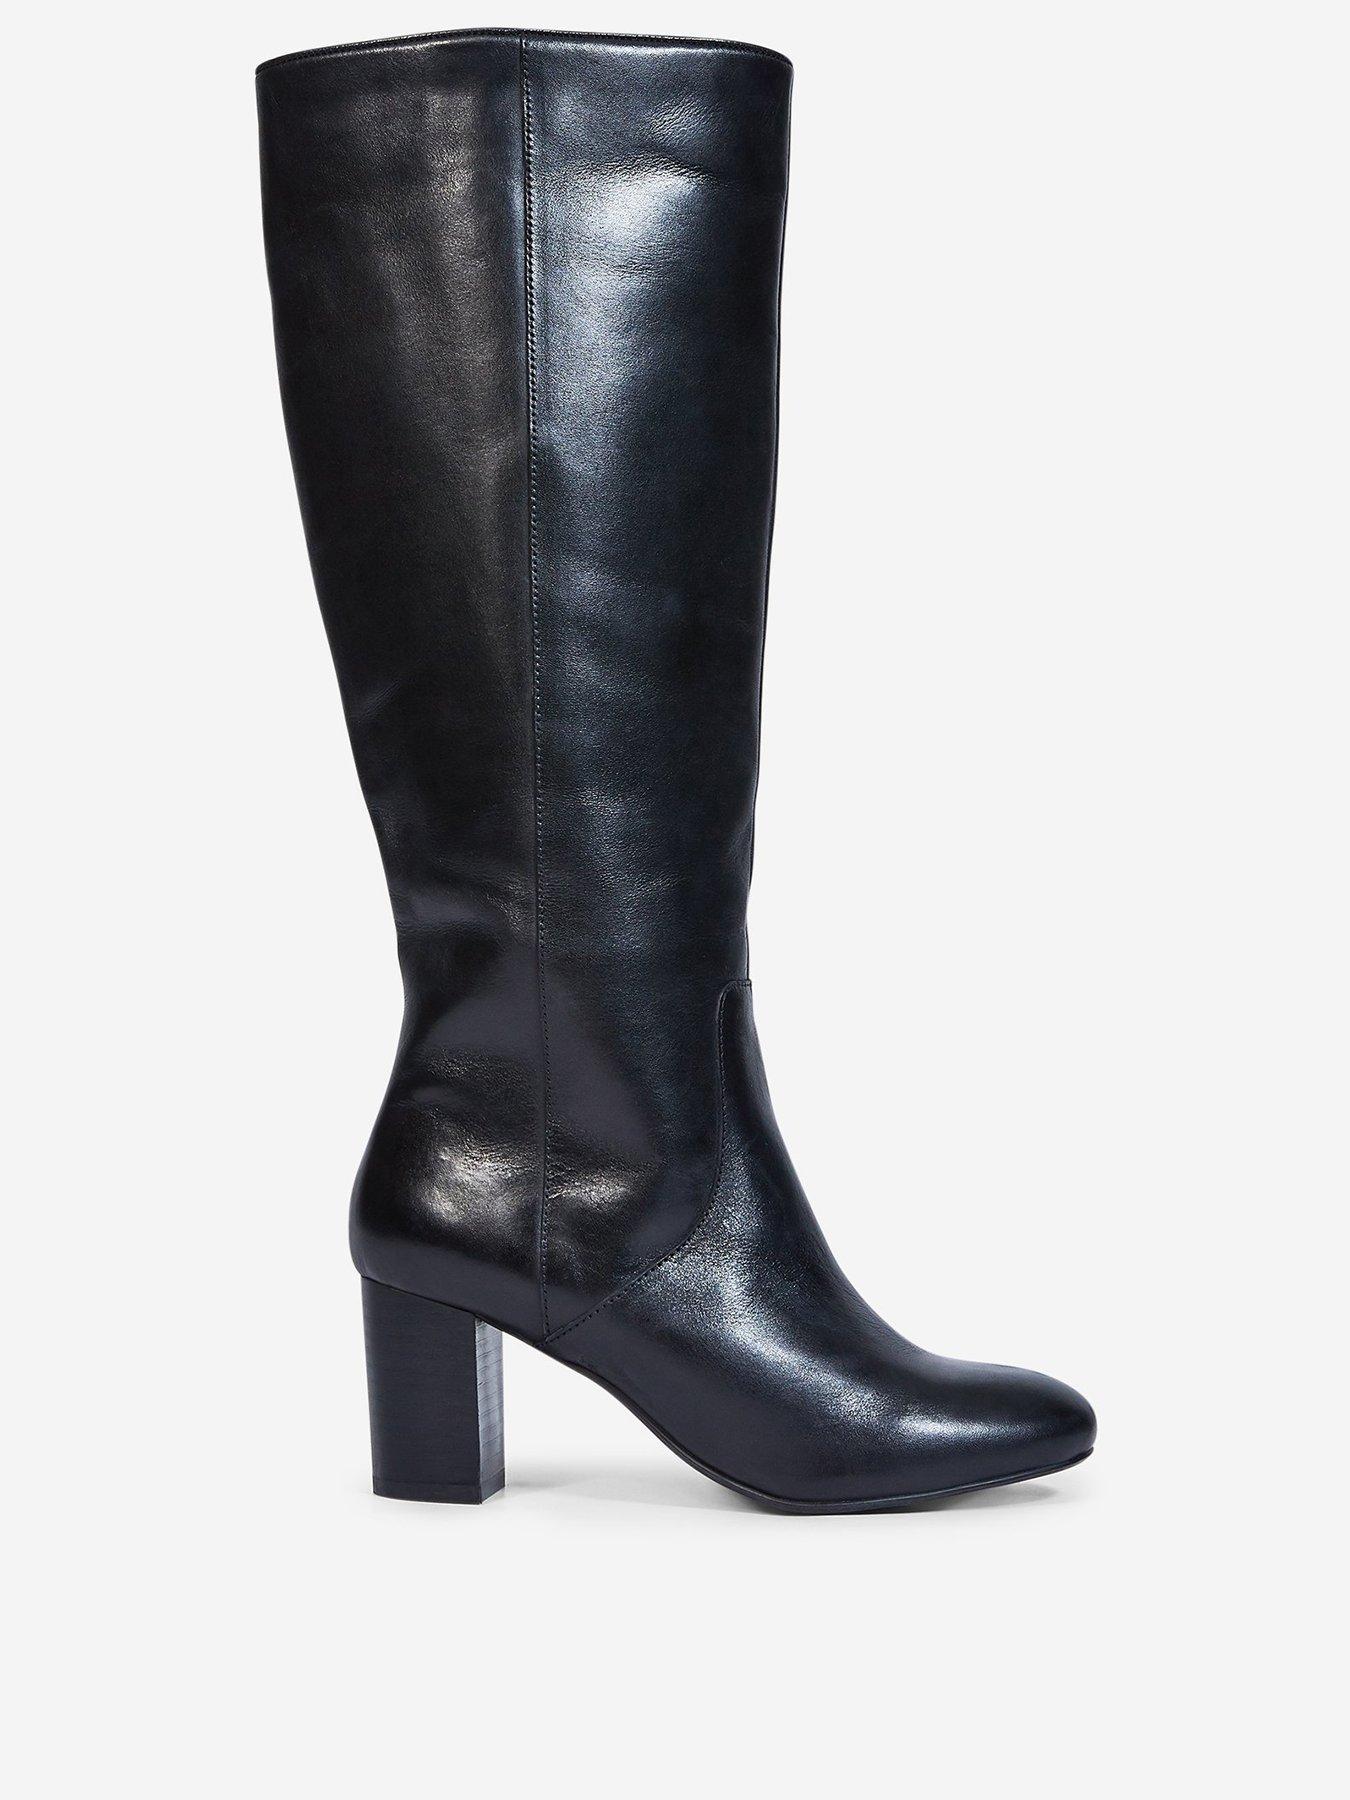 womens knee high boots sale uk